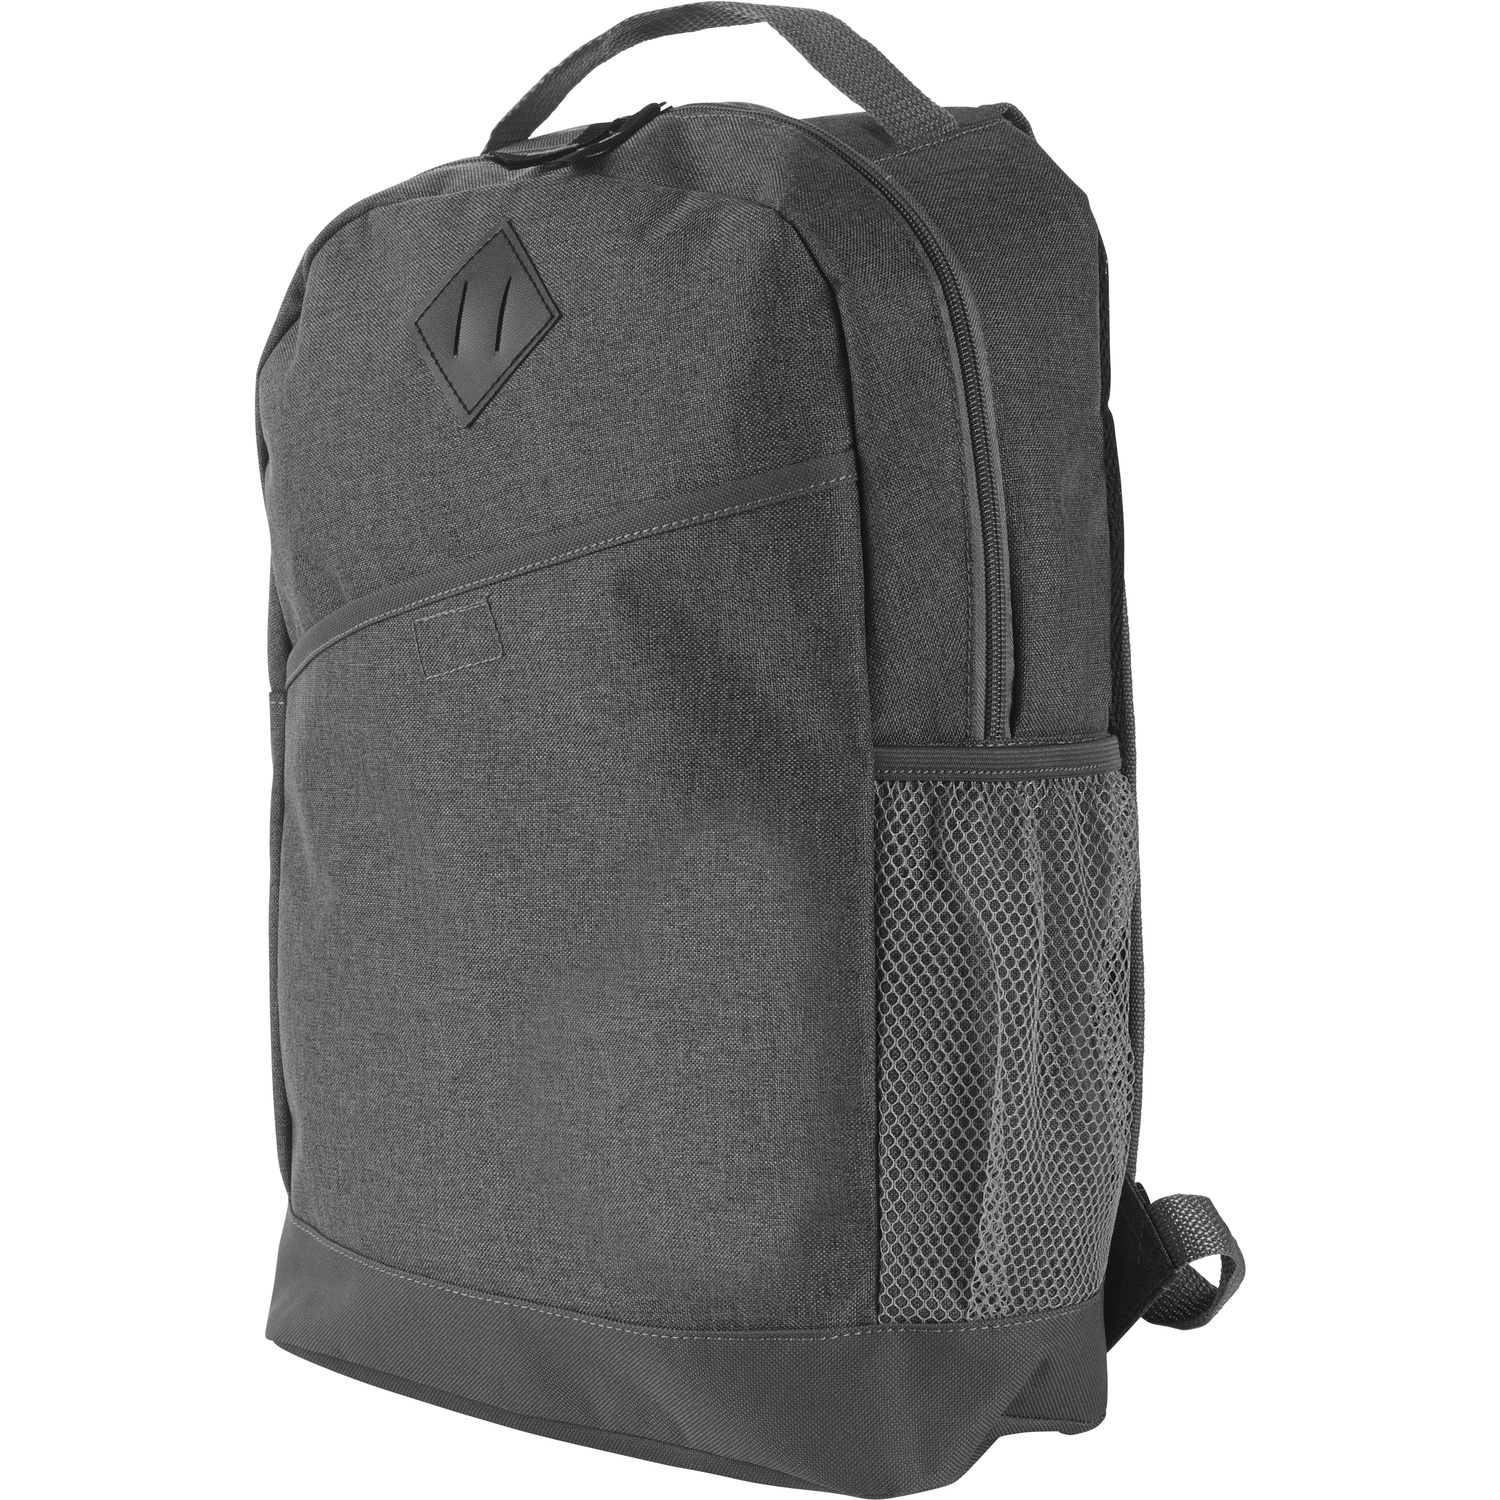 000946 003999999 3d090 rgt pro01 fal - Rover Polycanvas backpack